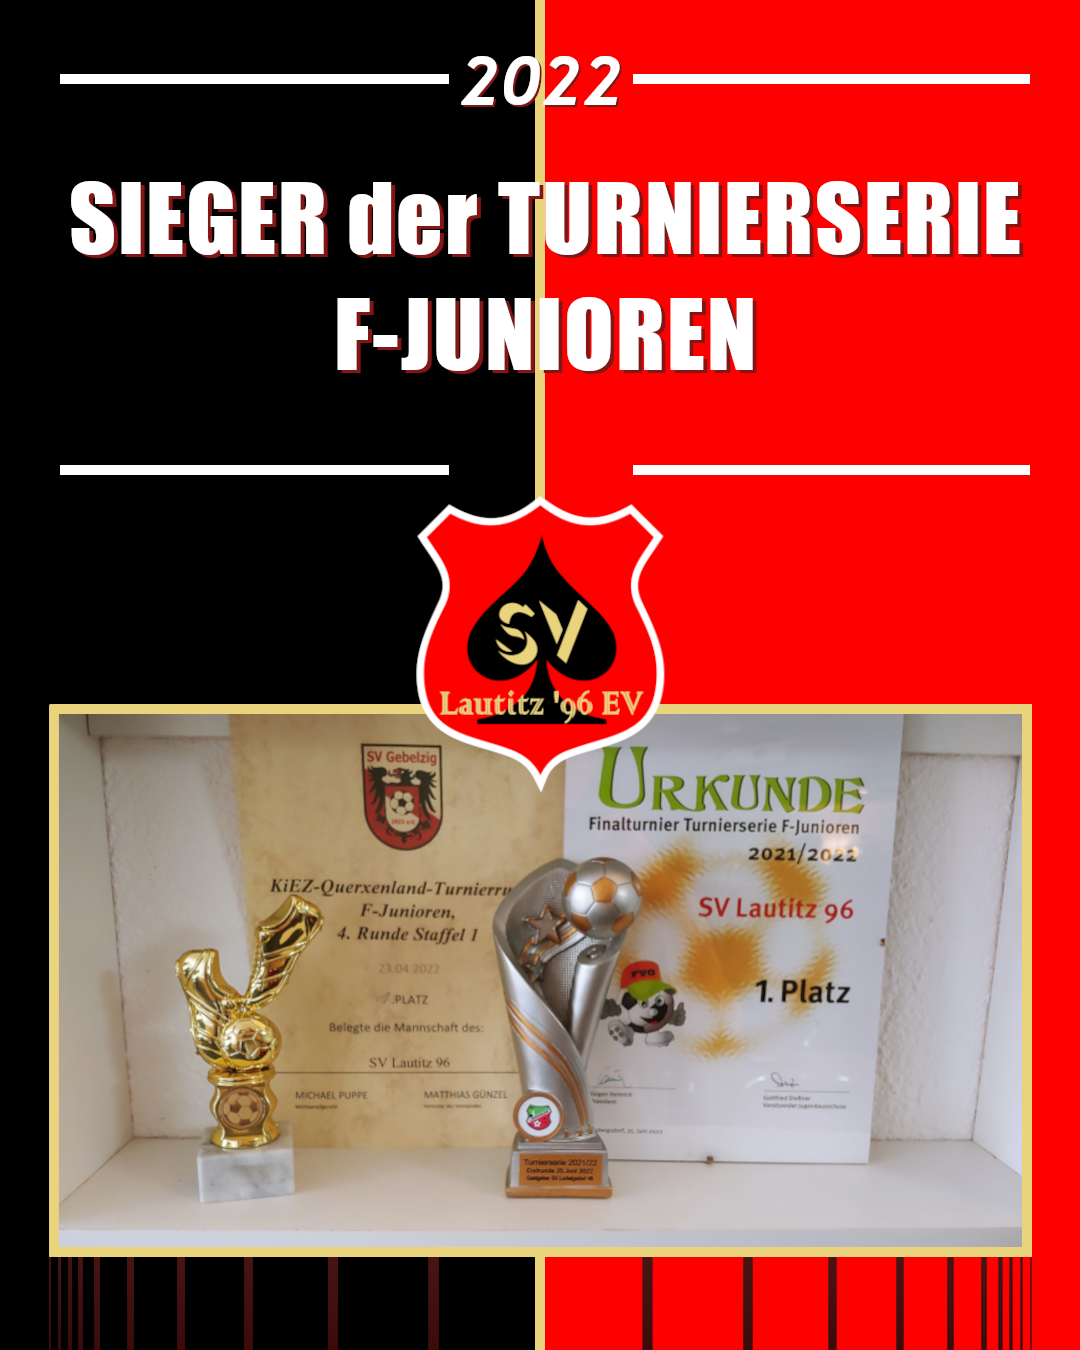 Turnierserien Sieger SV Lautitz 96 F-Junioren